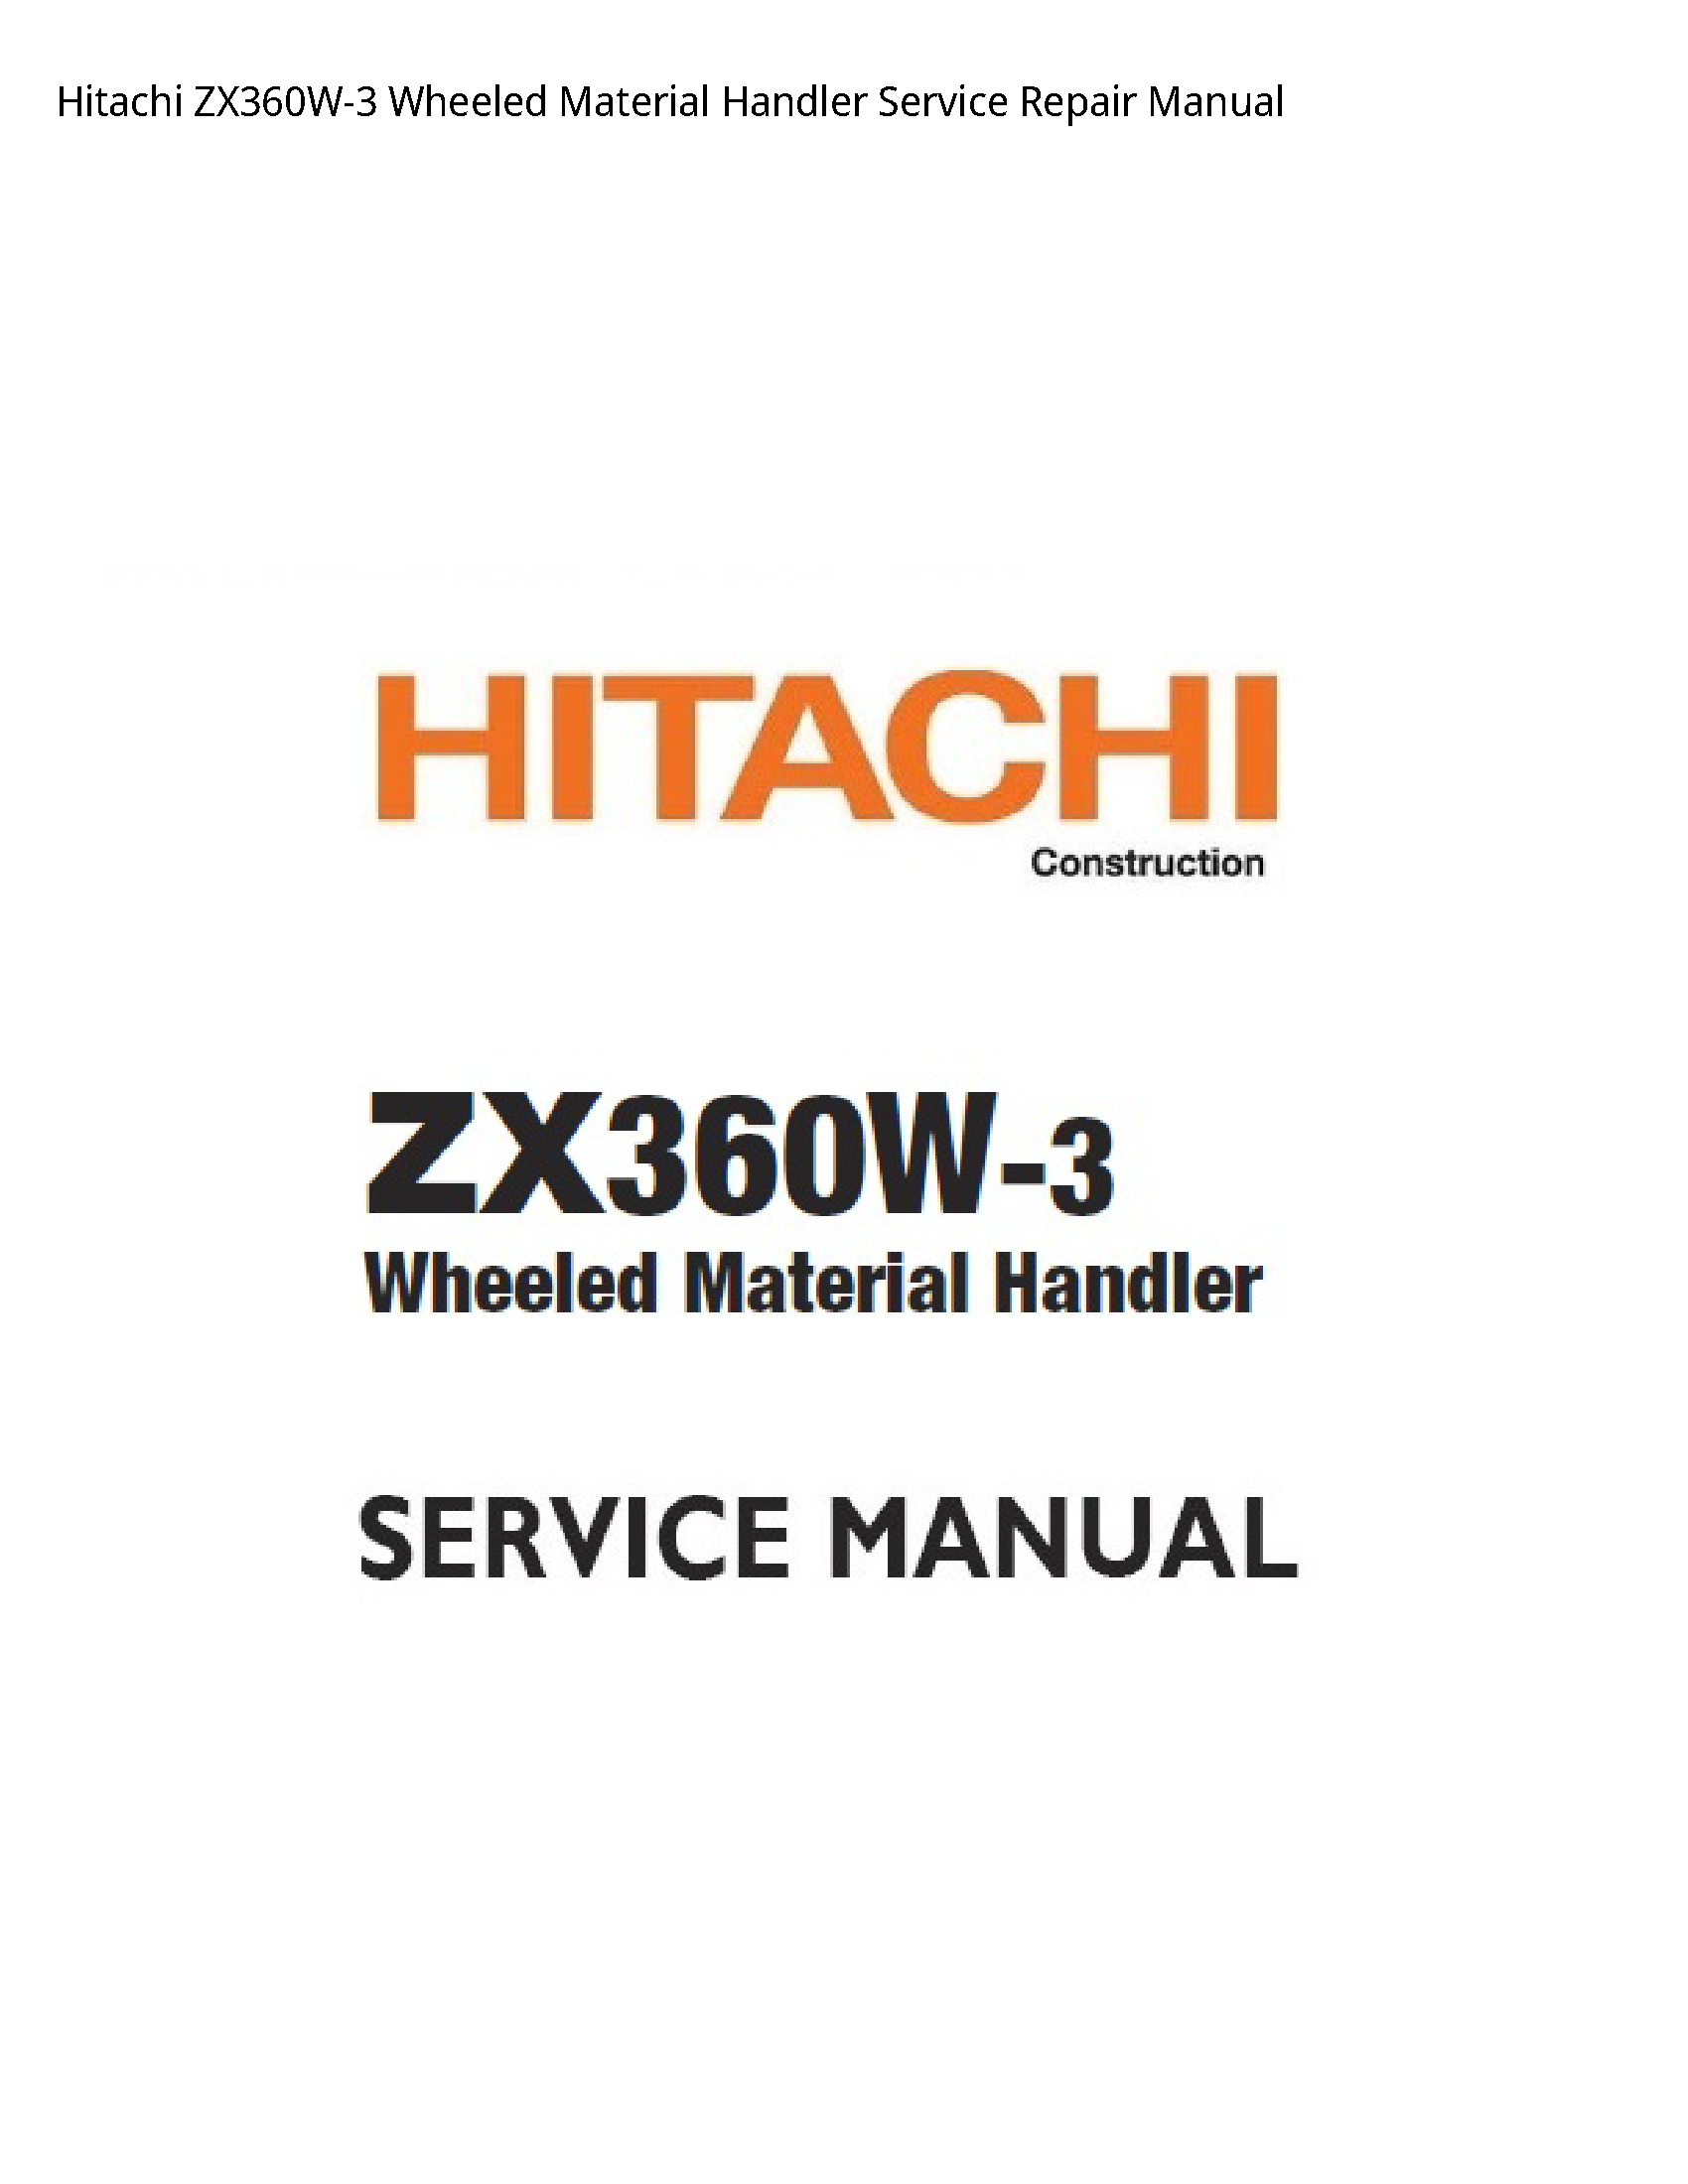 Hitachi ZX360W-3 Wheeled Material Handler manual